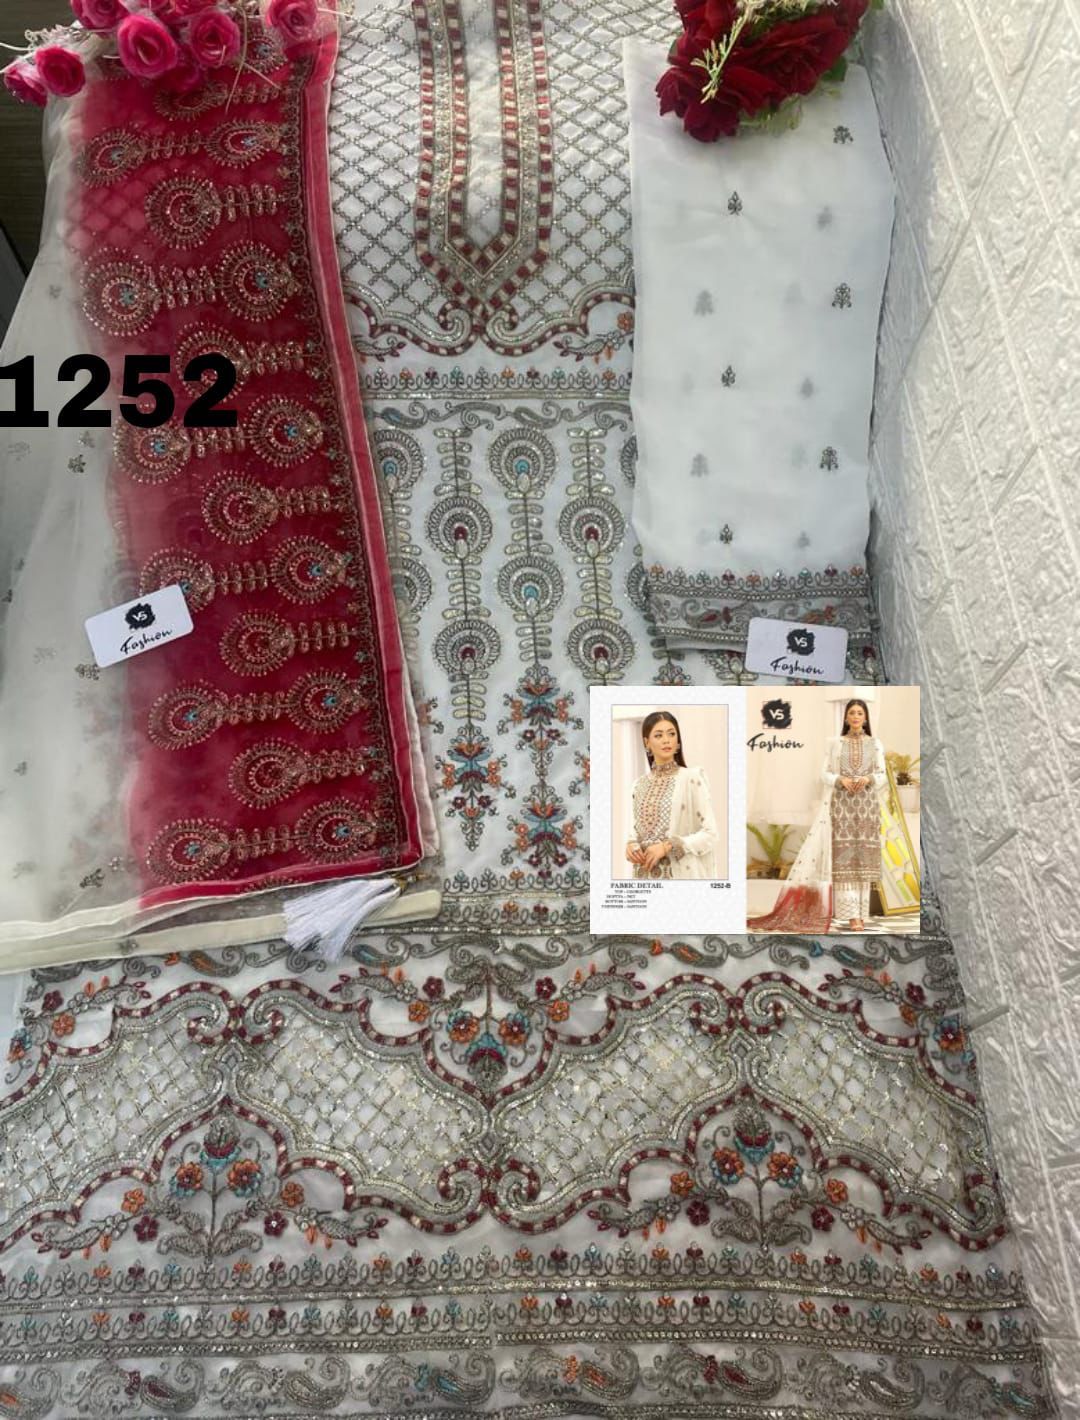 Buy Georgette Embroidery Vs 1252 Vs Fashion Pakistani Salwar